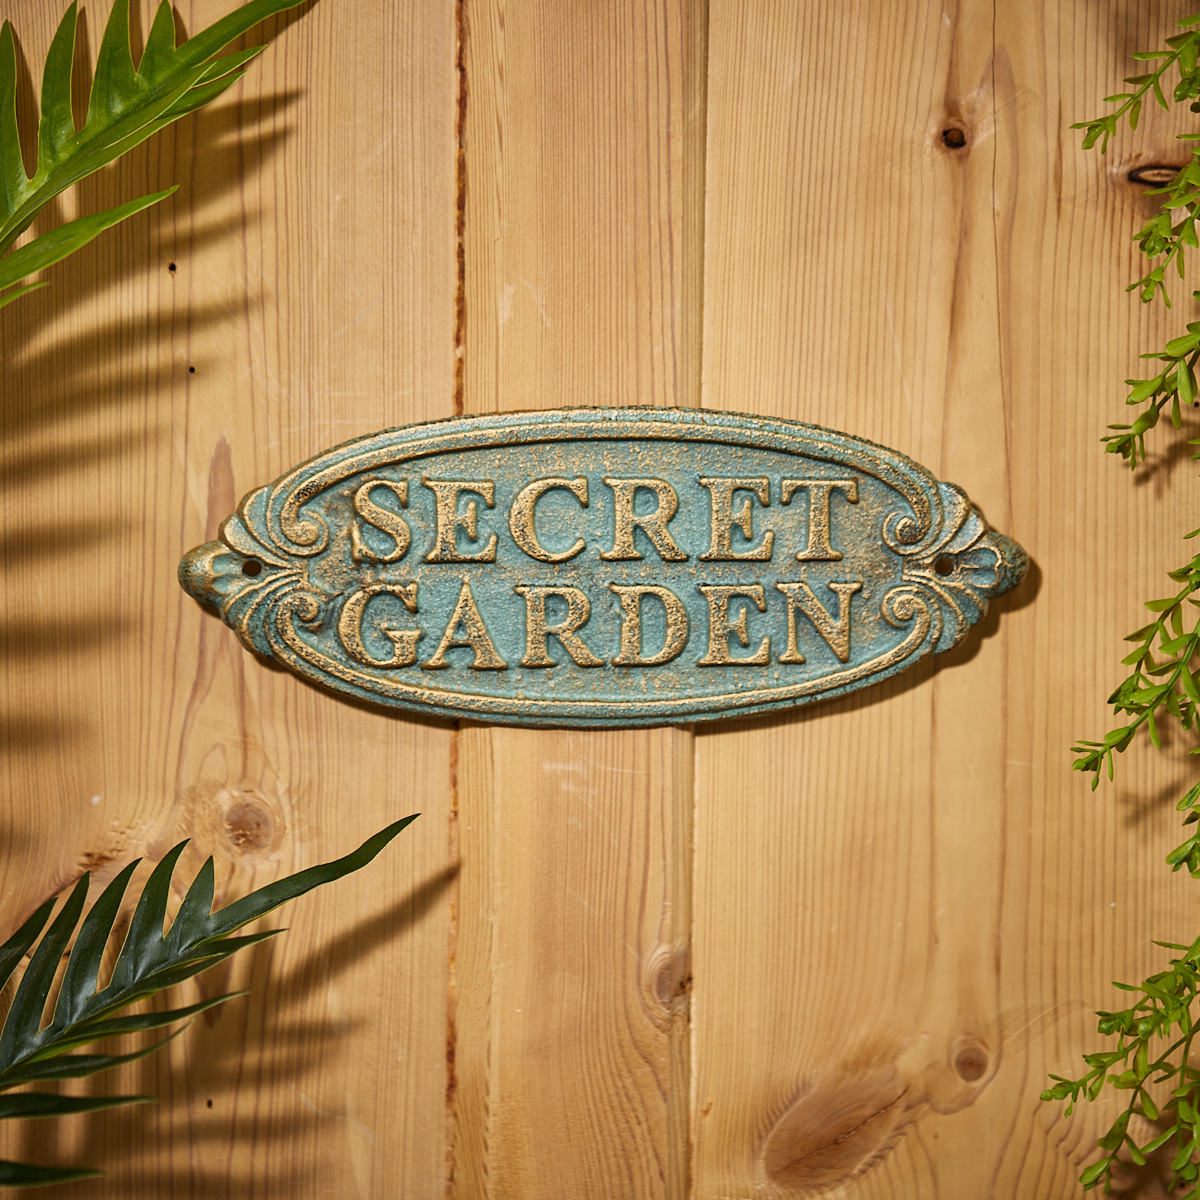 Wrought Iron Verdigris Secret Garden Plaque